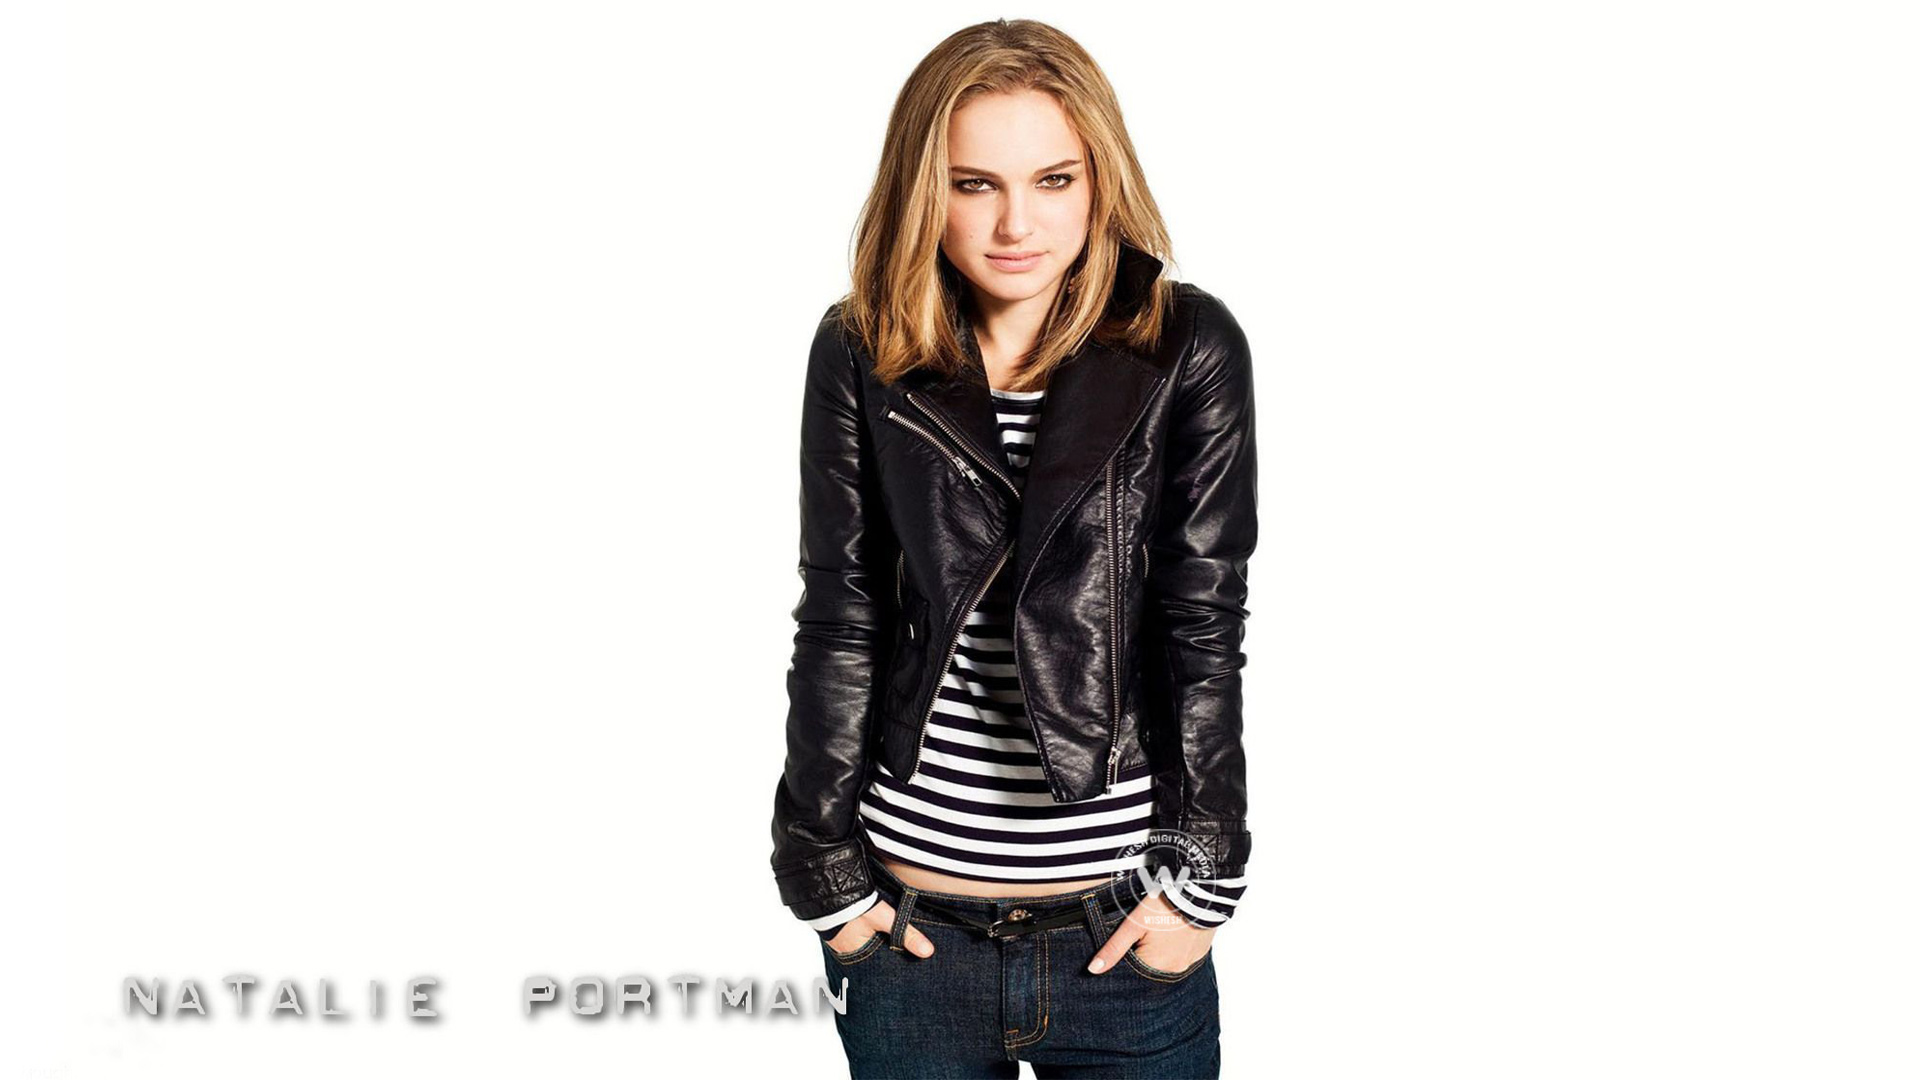 latest gorgoeus images of actress natalie portman | Natalie Portman Latest Hot Wallpapers | actress natalie portman latest hot gallery | Wallpaper 12of 12